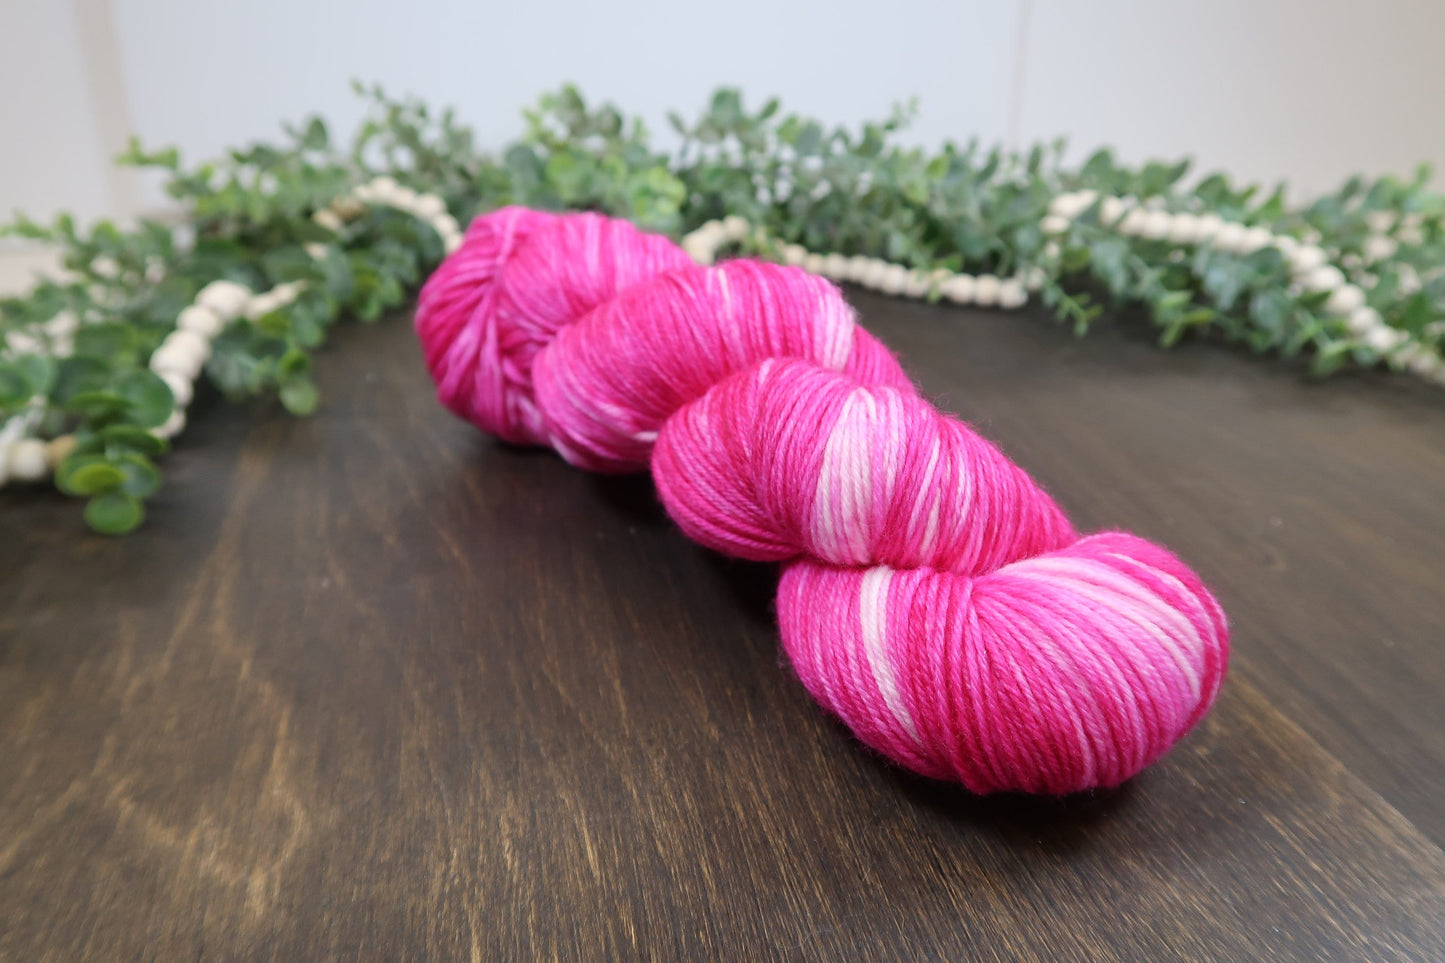 Hand Dyed Yarn | Fingering Weight | Sock Yarn  | 75/25 Yarn | Superwash Merino Wool | Color: Laffy Taffy Pink